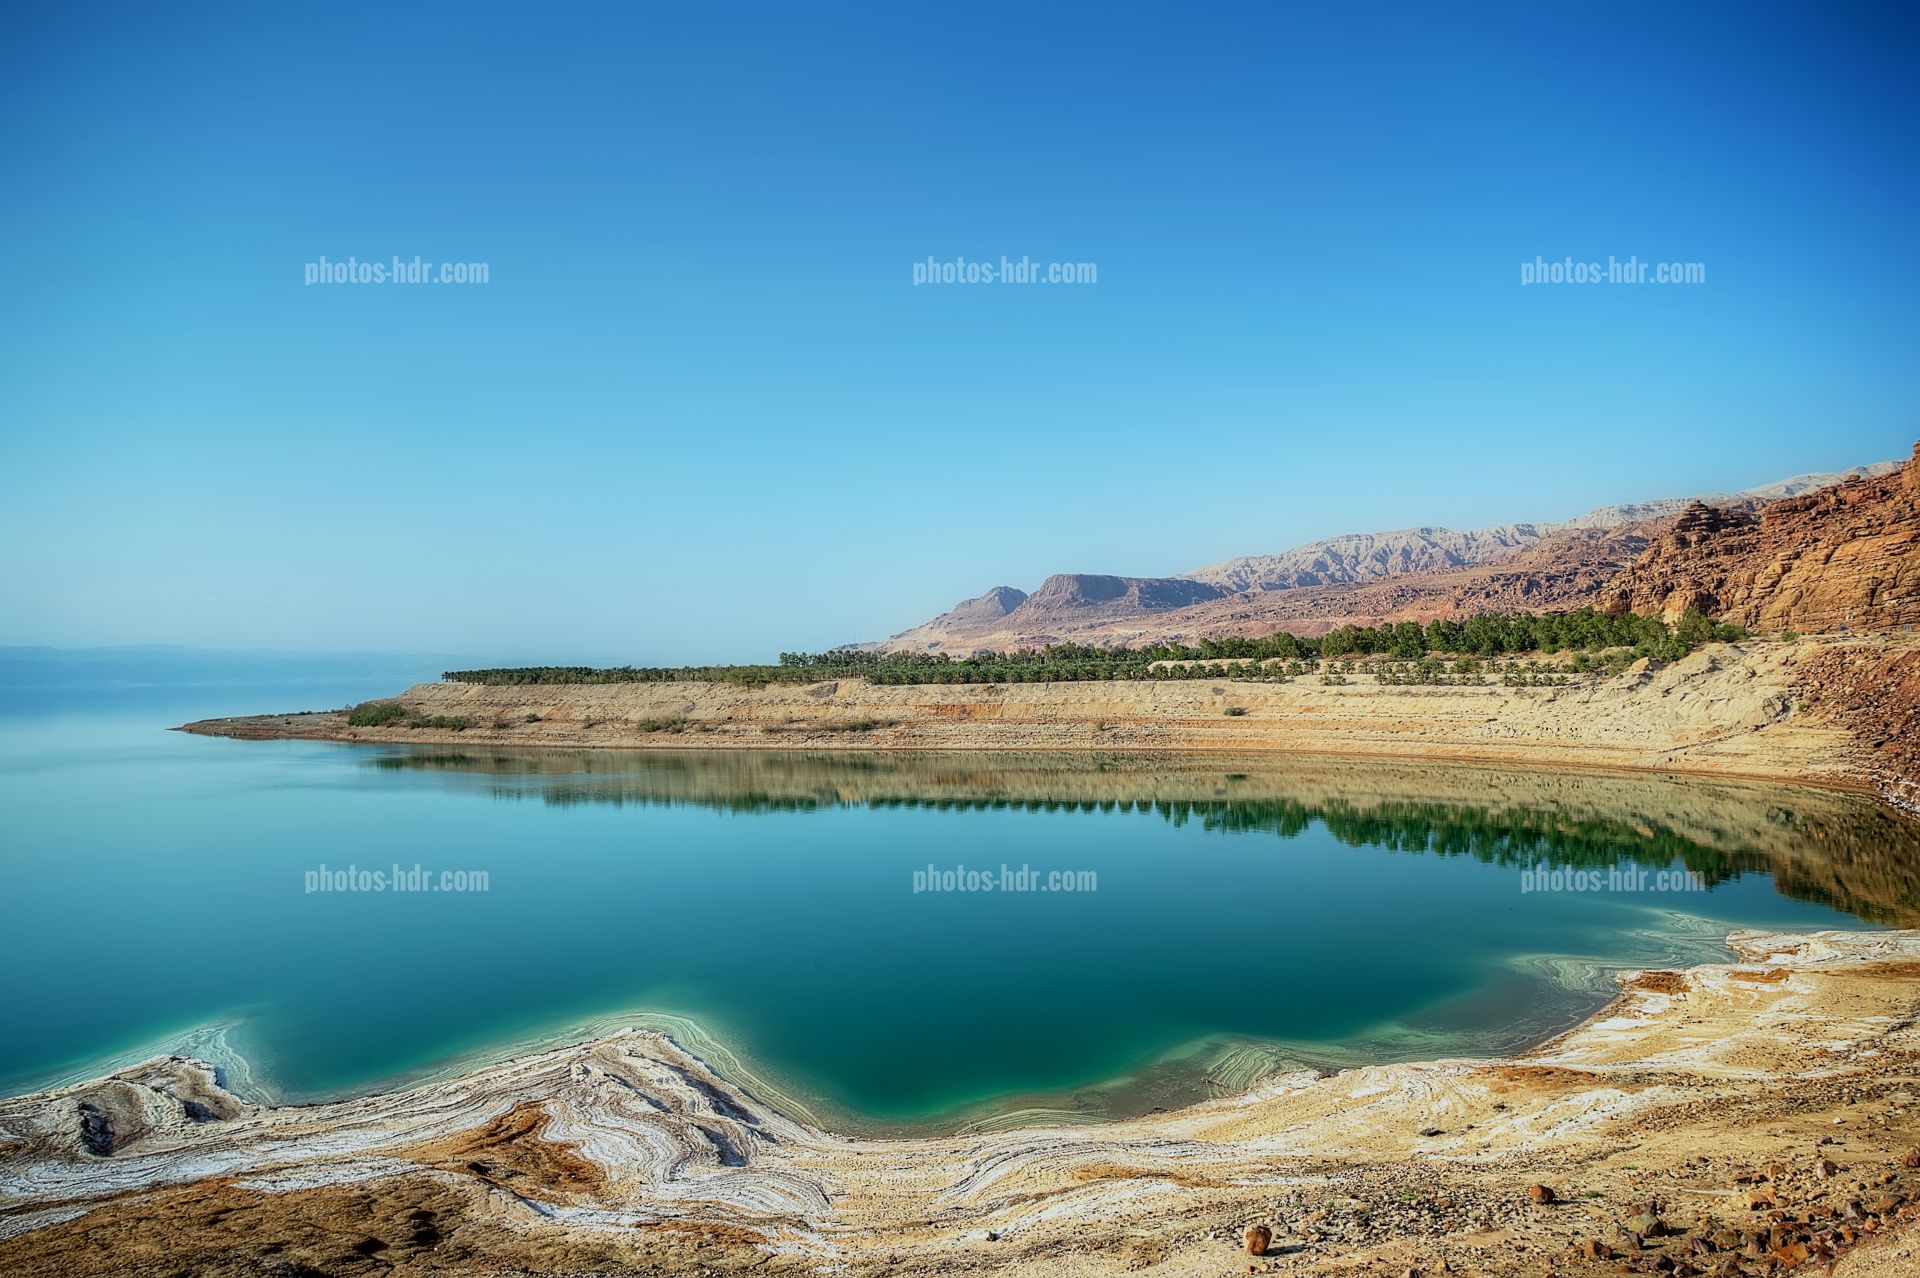 /The dead sea, Jordania